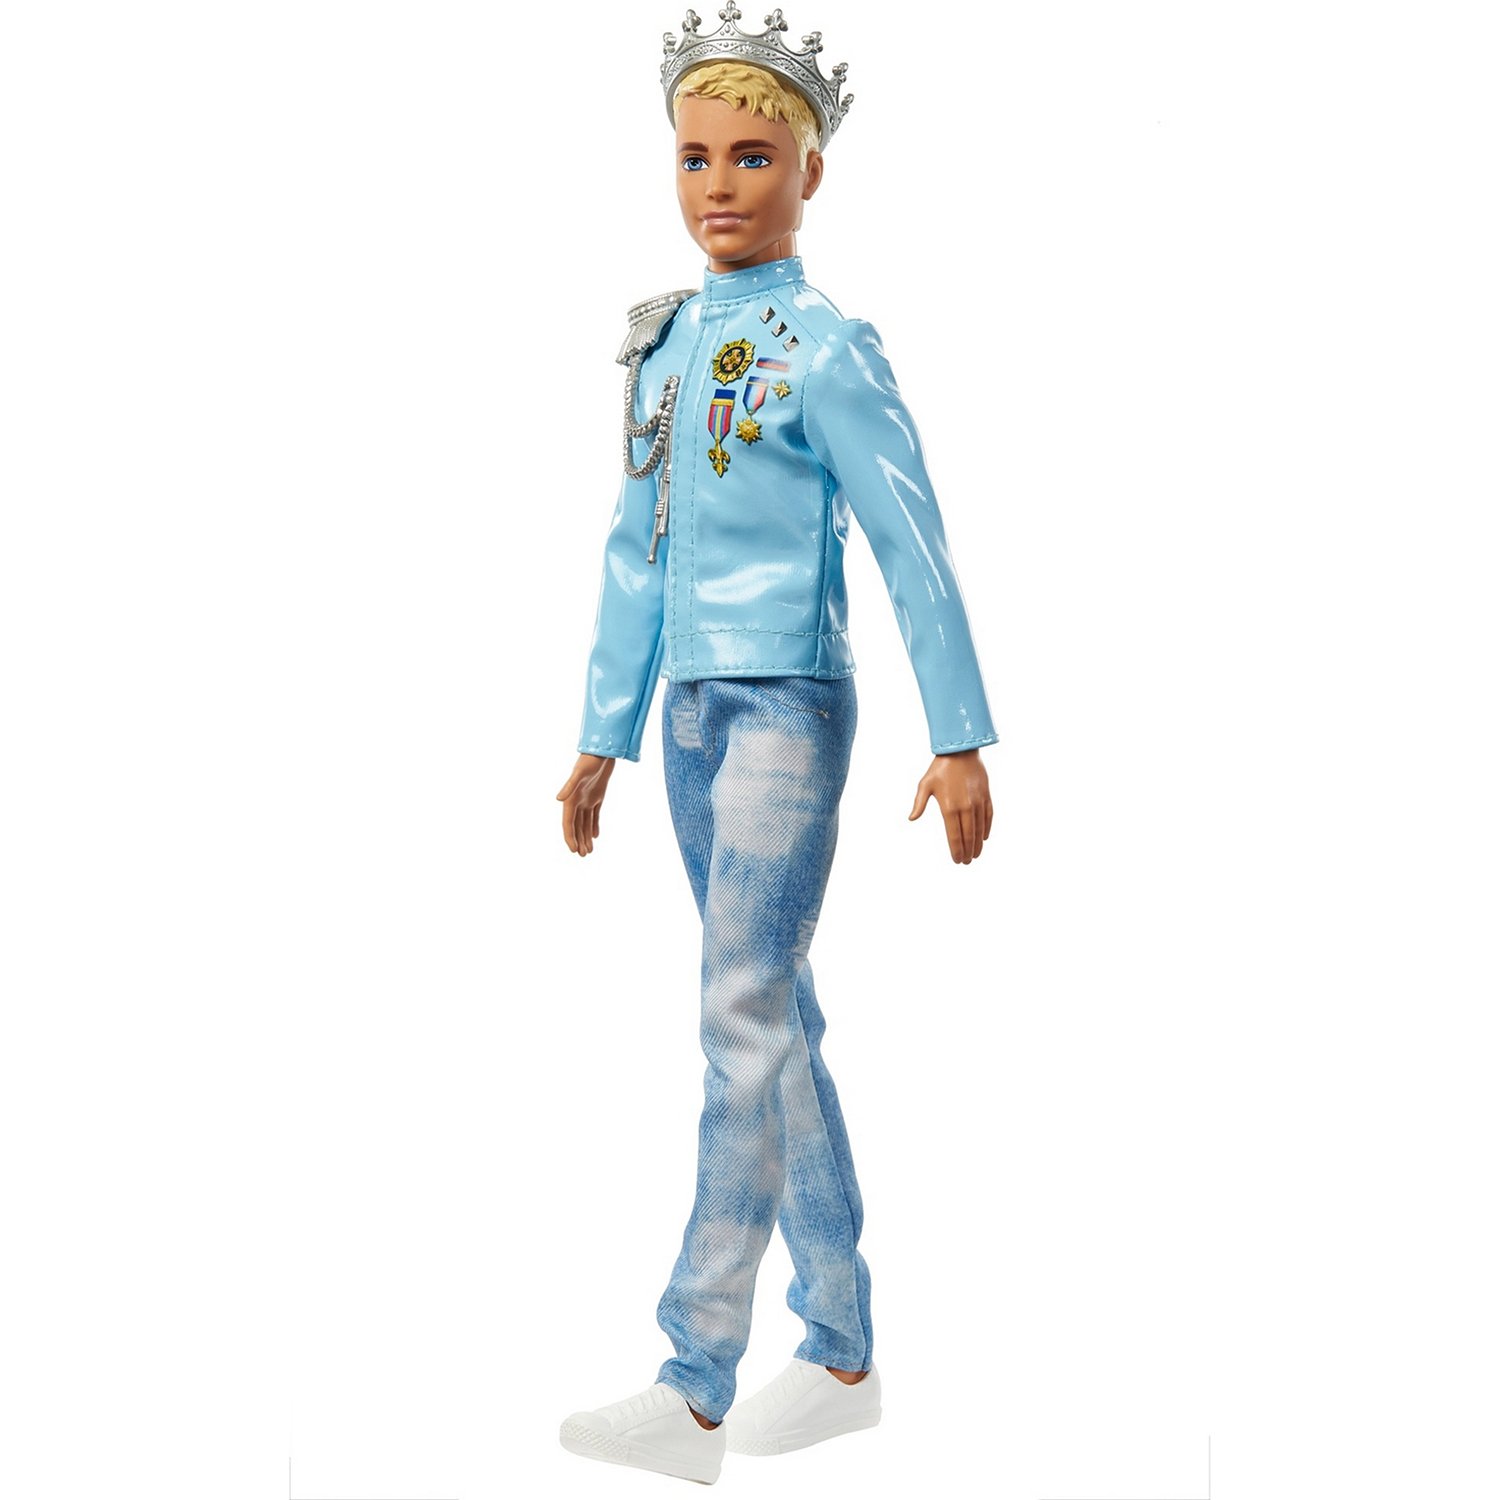 Кукла Barbie Princess Adventure Кен Принц, GML67